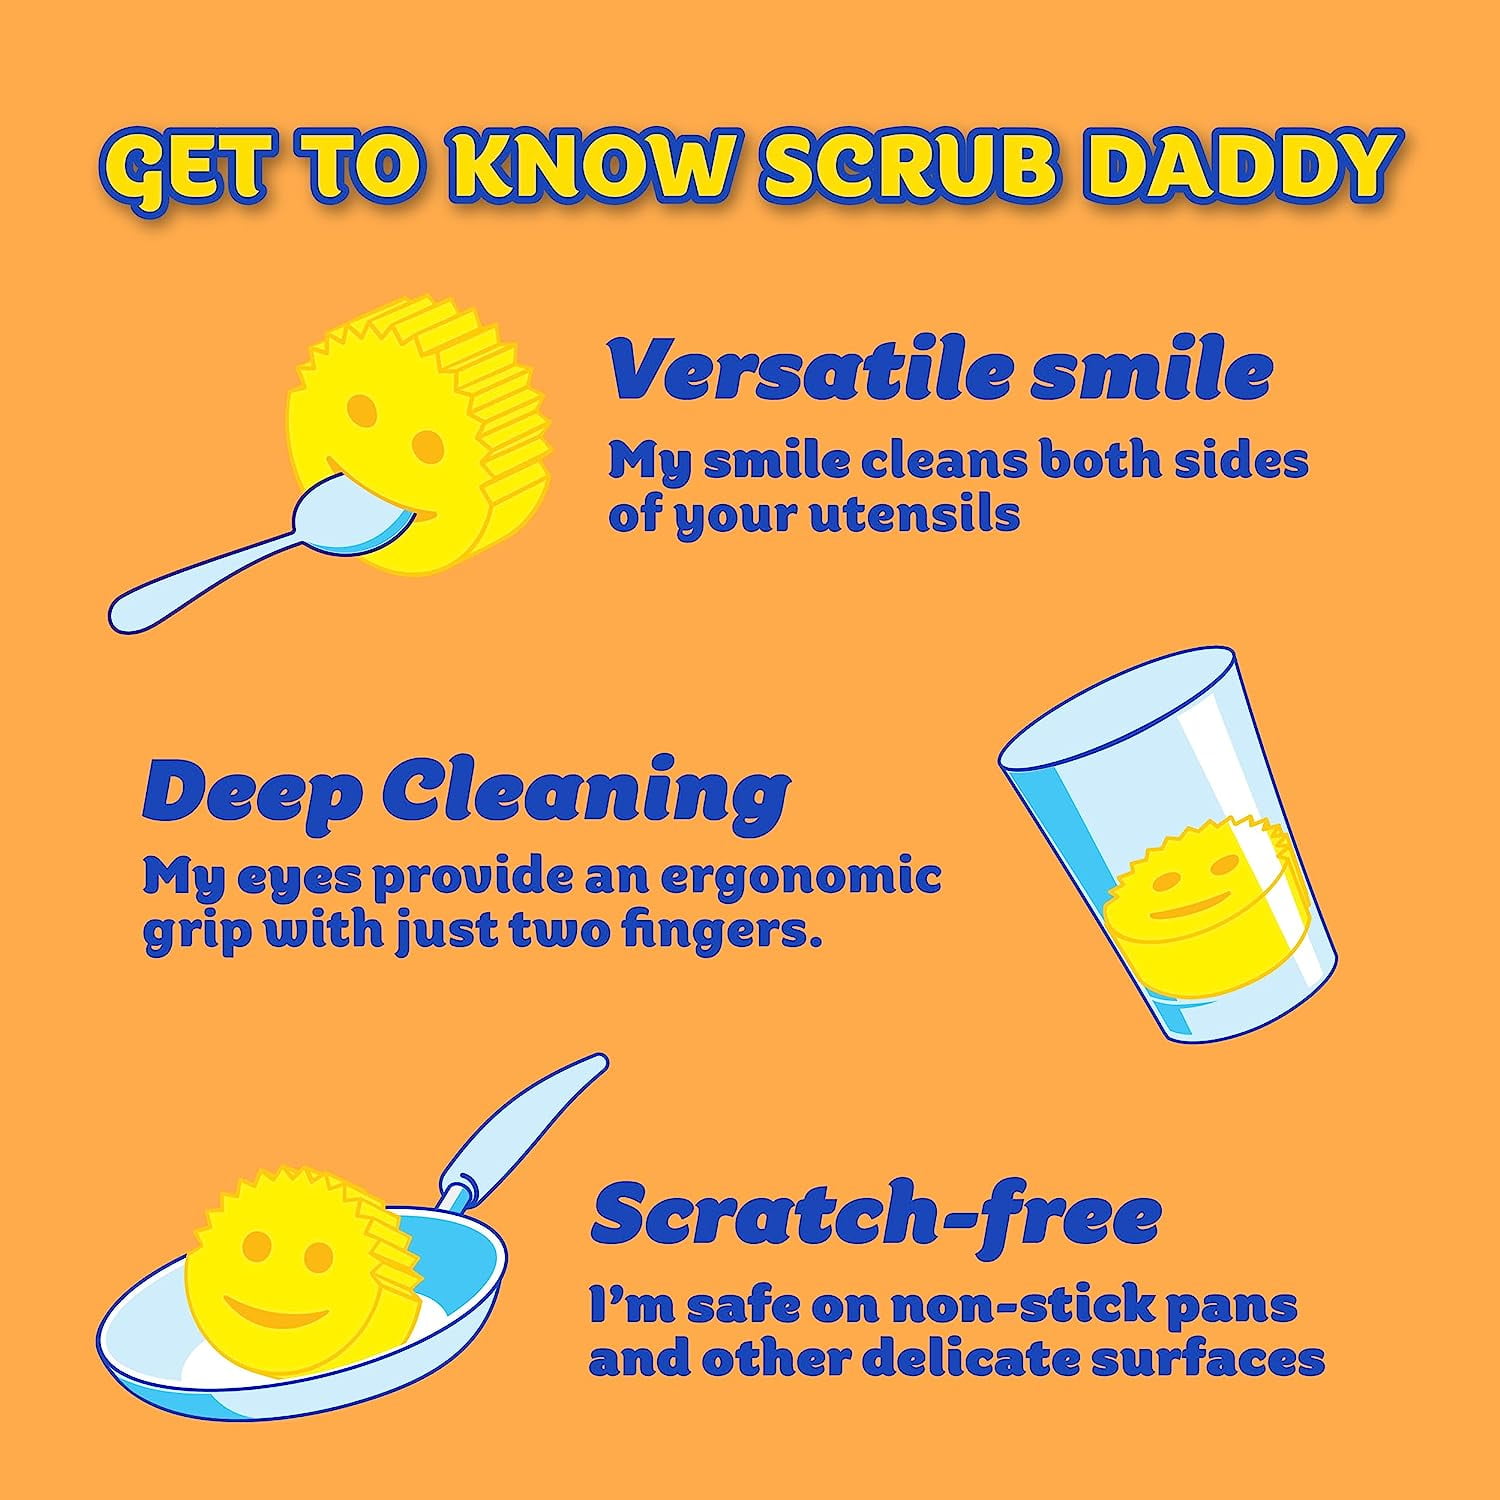 Scrub Daddy OG + Scrub Mommy + CIF All Purpose Cleaning Cream, Original - Multi Surface Household Cleaning Cream Scratch-Free Multipurpose Dish